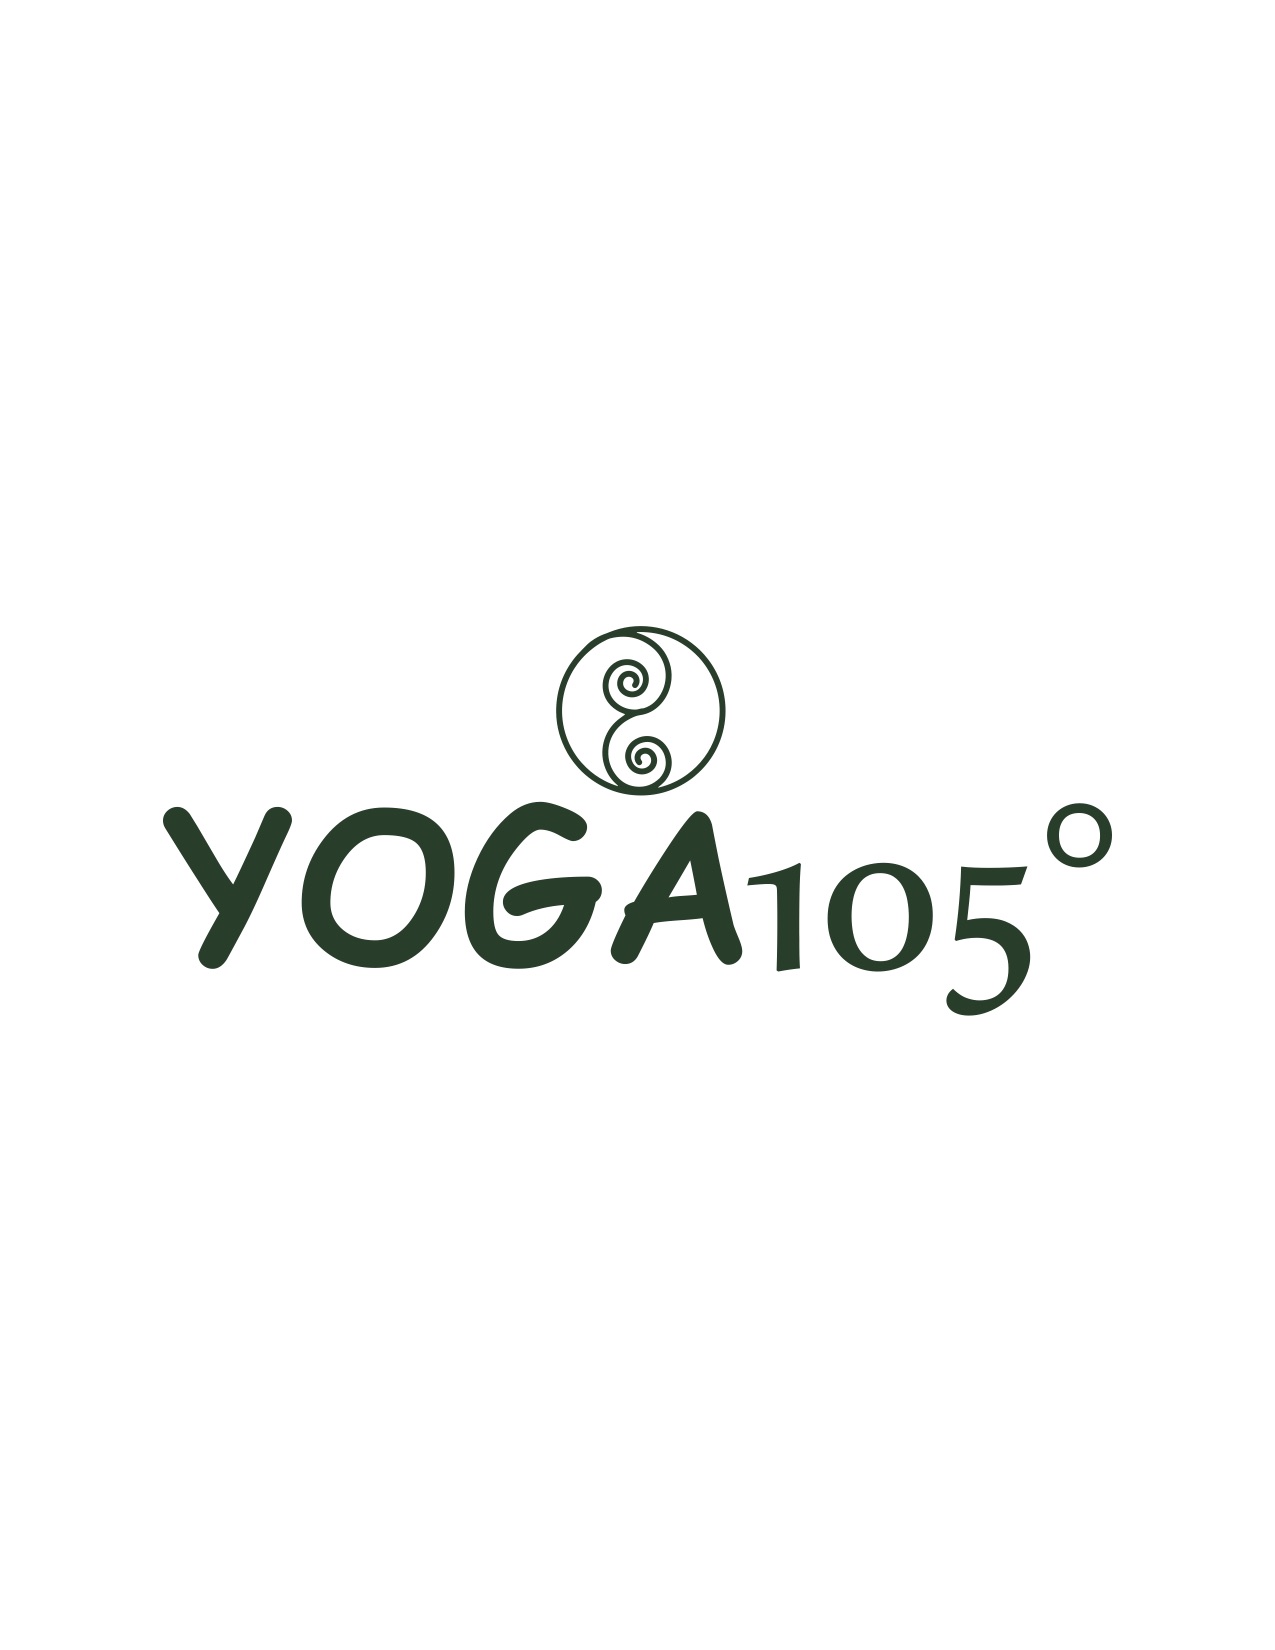 Yoga105